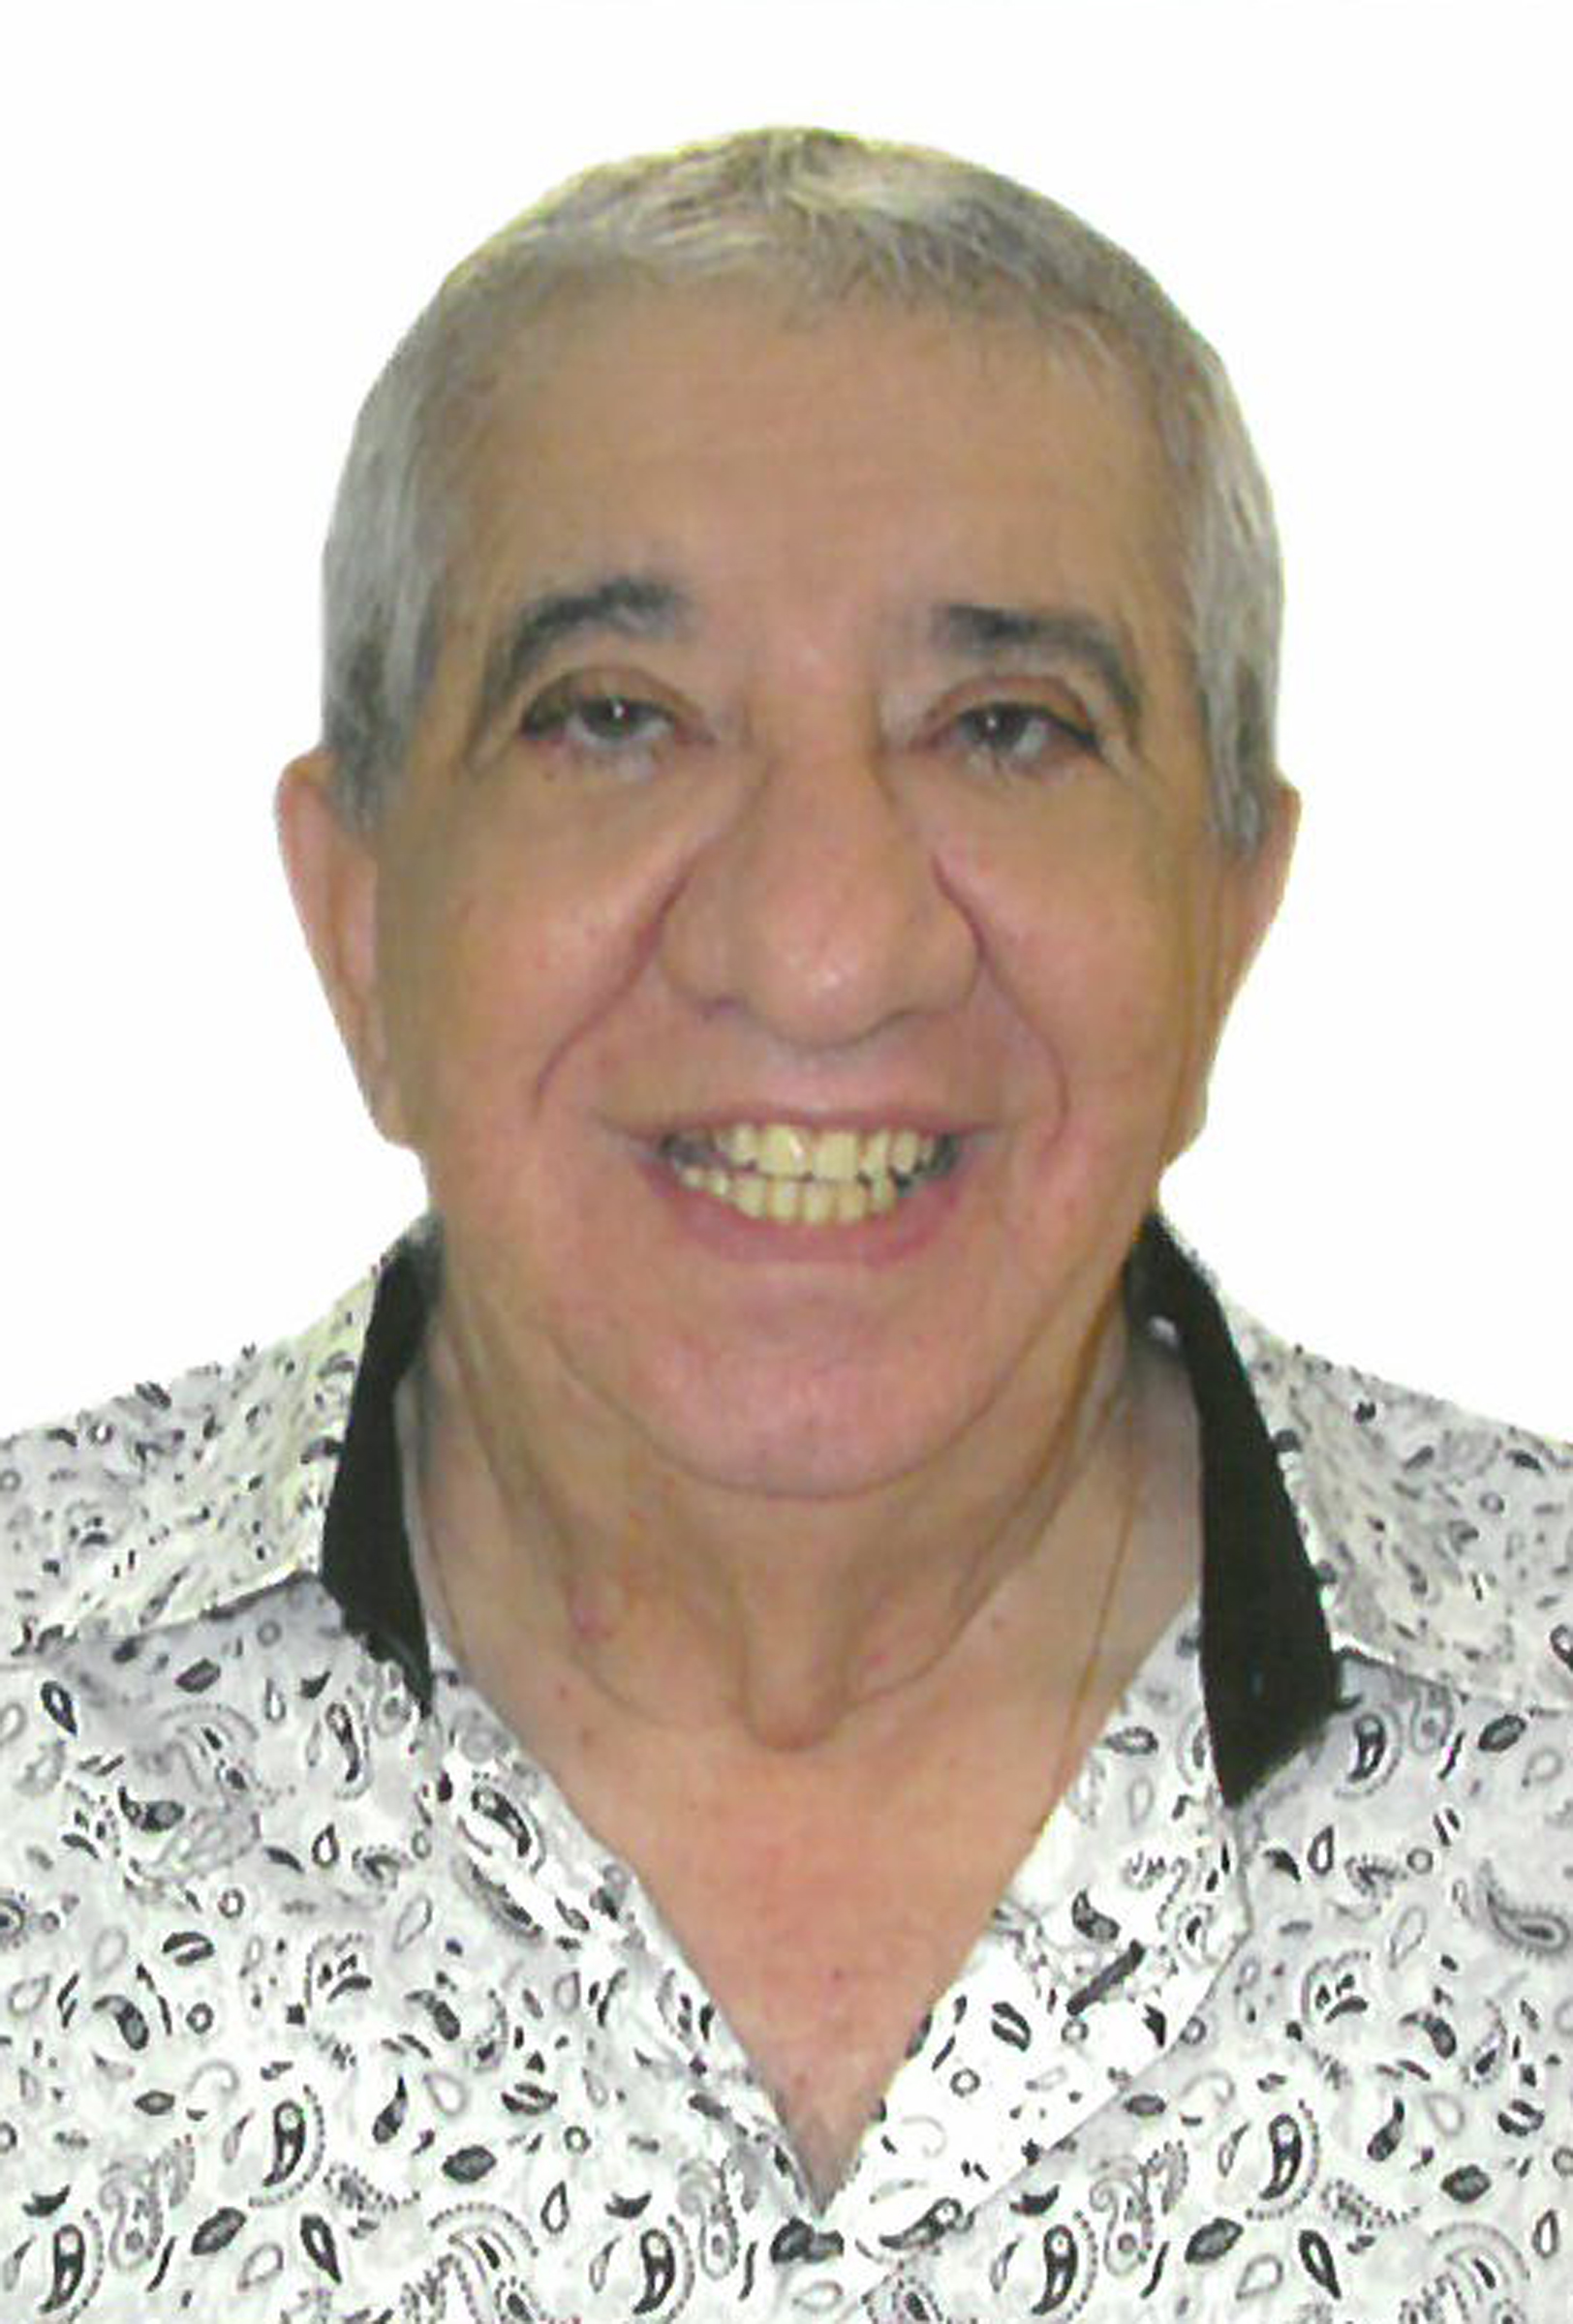 José Diógenes Menezes Brayner